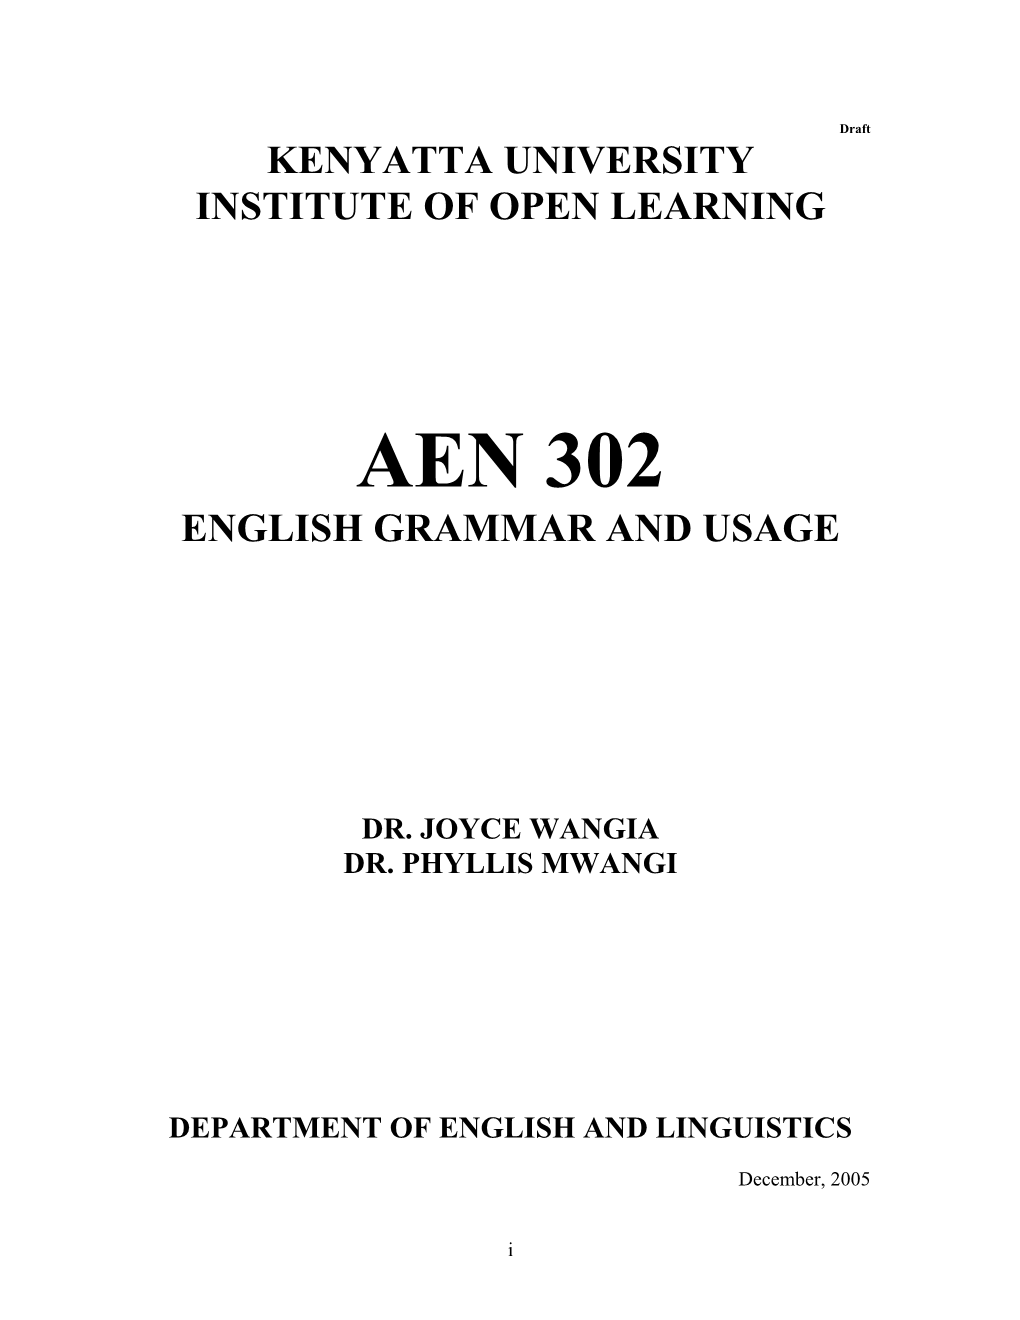 Aen-302-English-Grammar-And-Usage